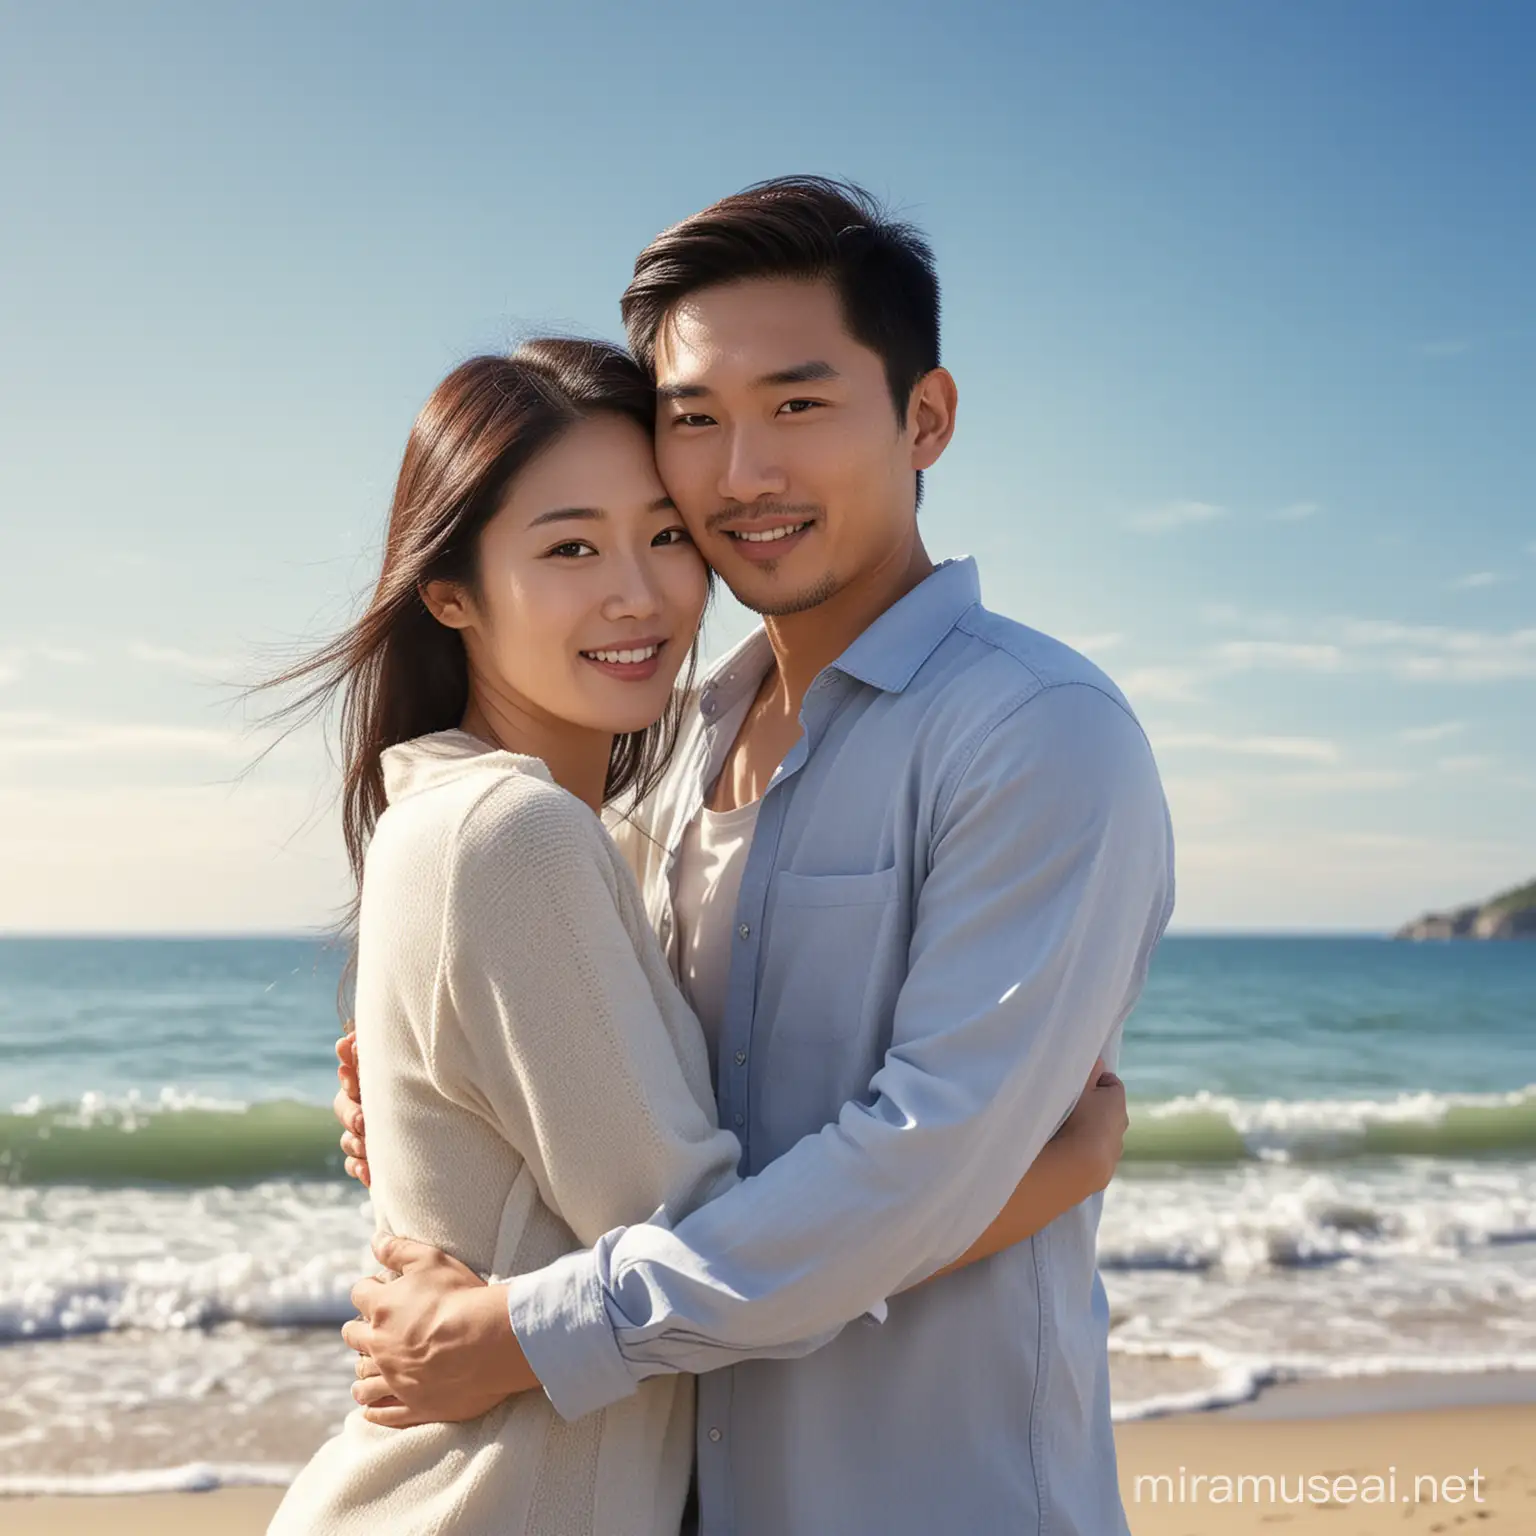 Romantic Asian Couple Hugging on a Beach Under Blue Sky